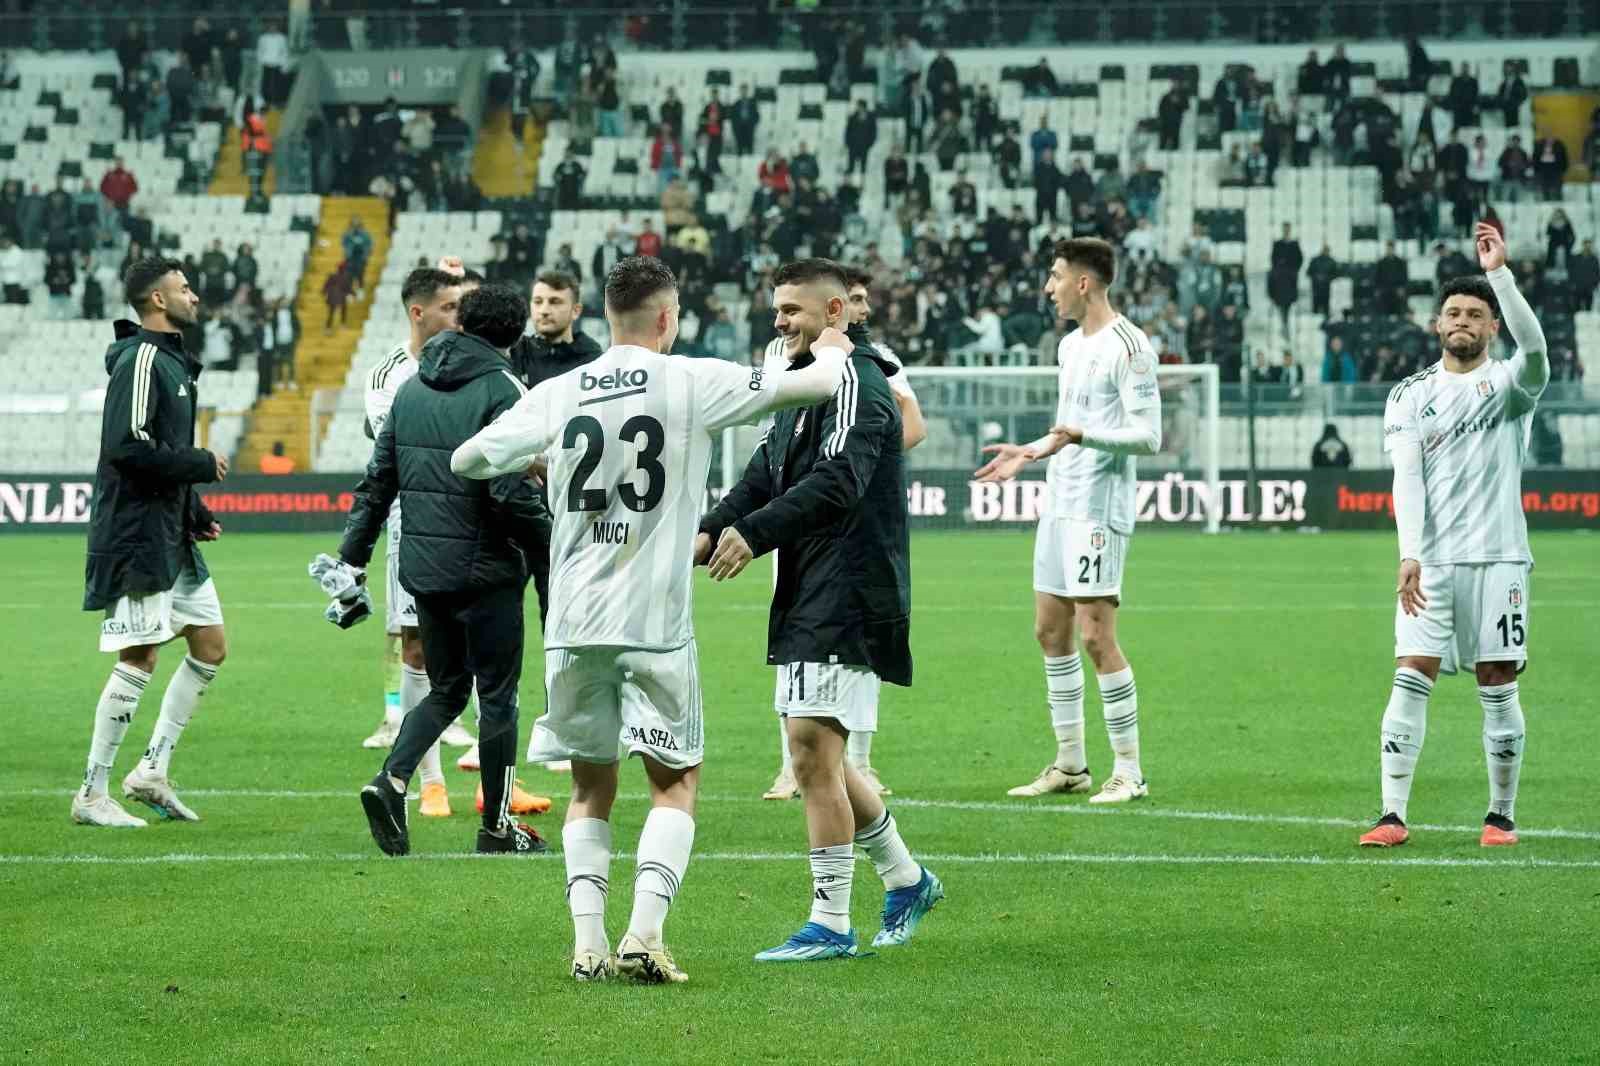 Trendyol Süper Lig: Beşiktaş: 2 - MKE Ankaragücü: 0 (Maç sonucu)
